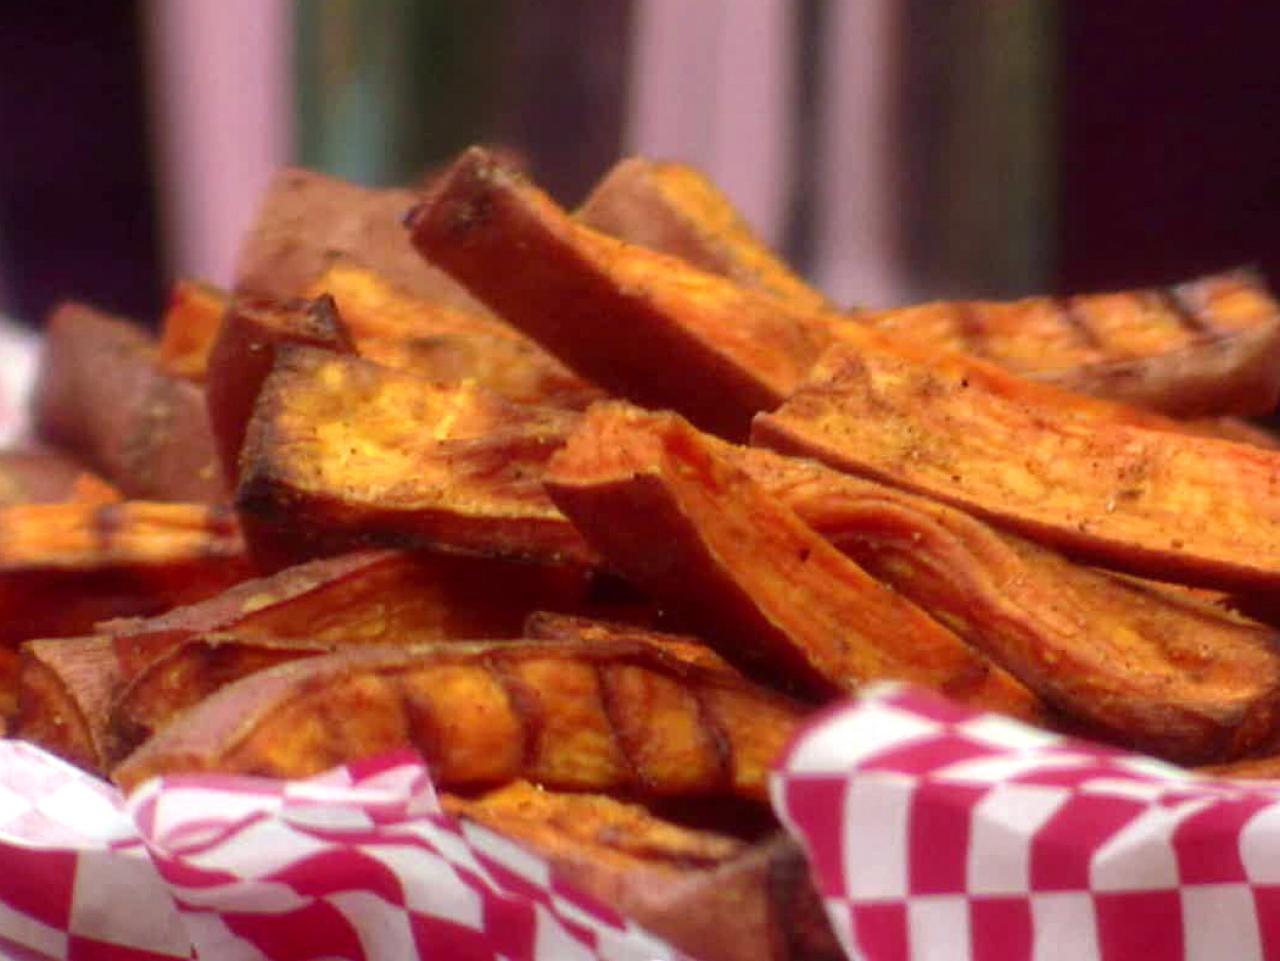 Recipe + Video] Batata Frita (Sweet Potato Fries)